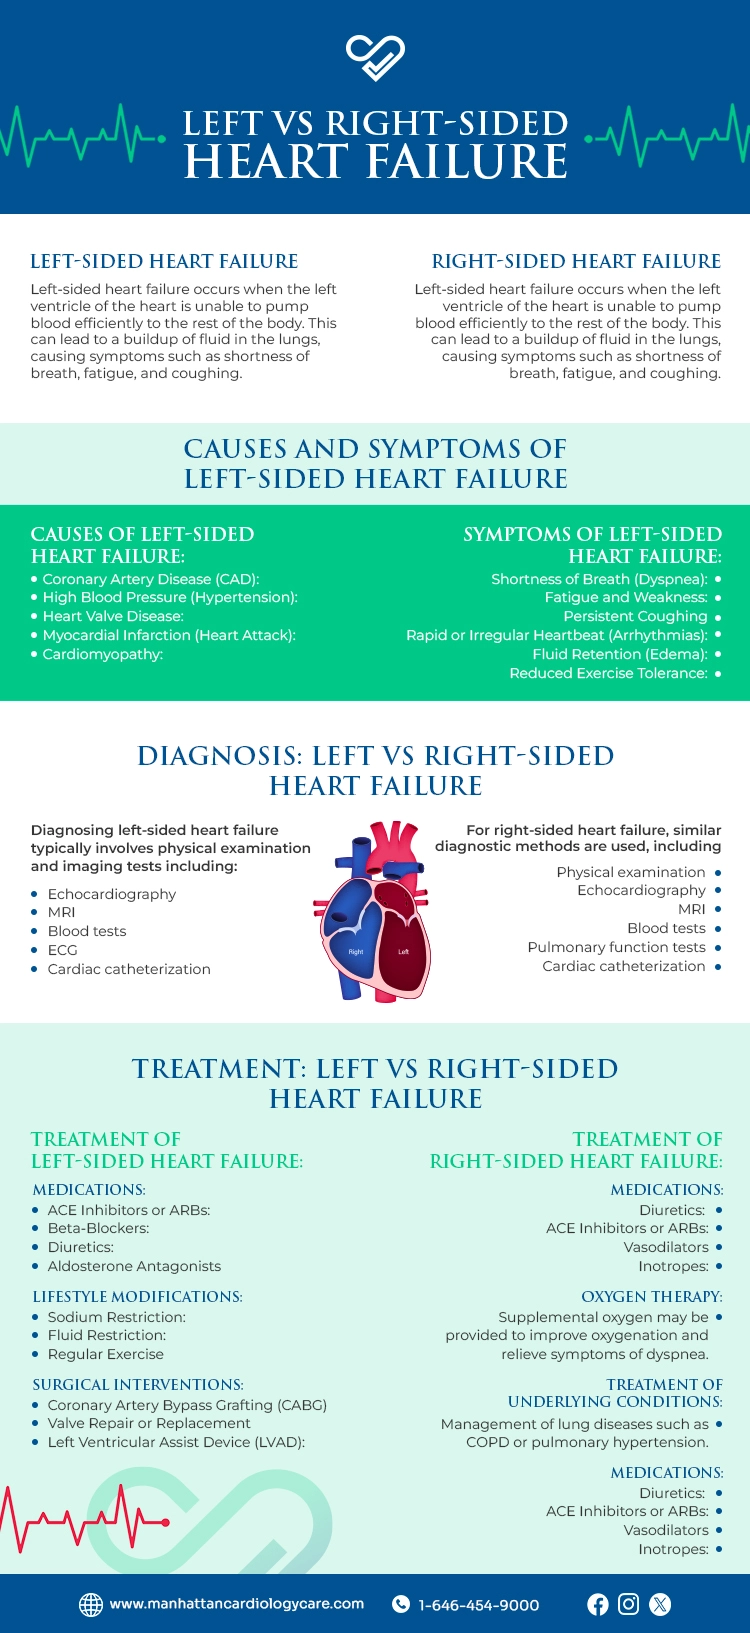 Left vs Right-Sided Heart Failure Explained